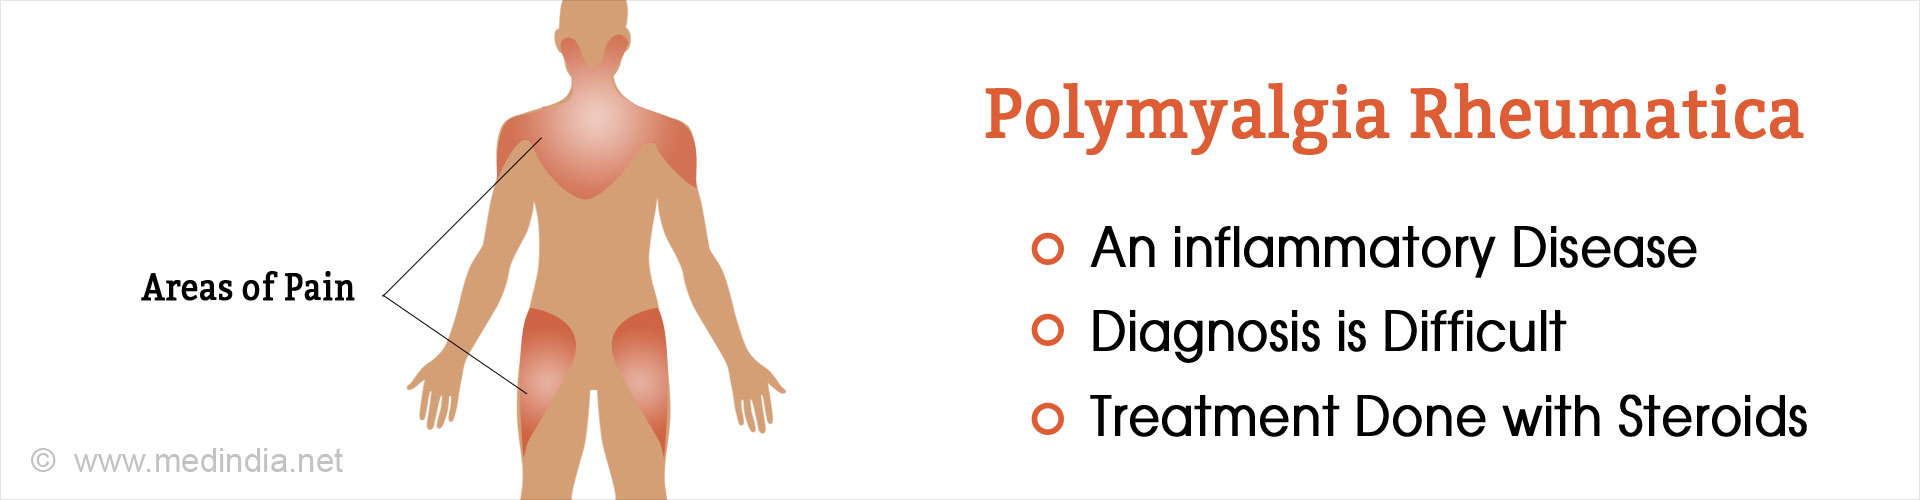 Polymyalgia Rheumatica Causes Symptoms Diagnosis Treatment And Prevention